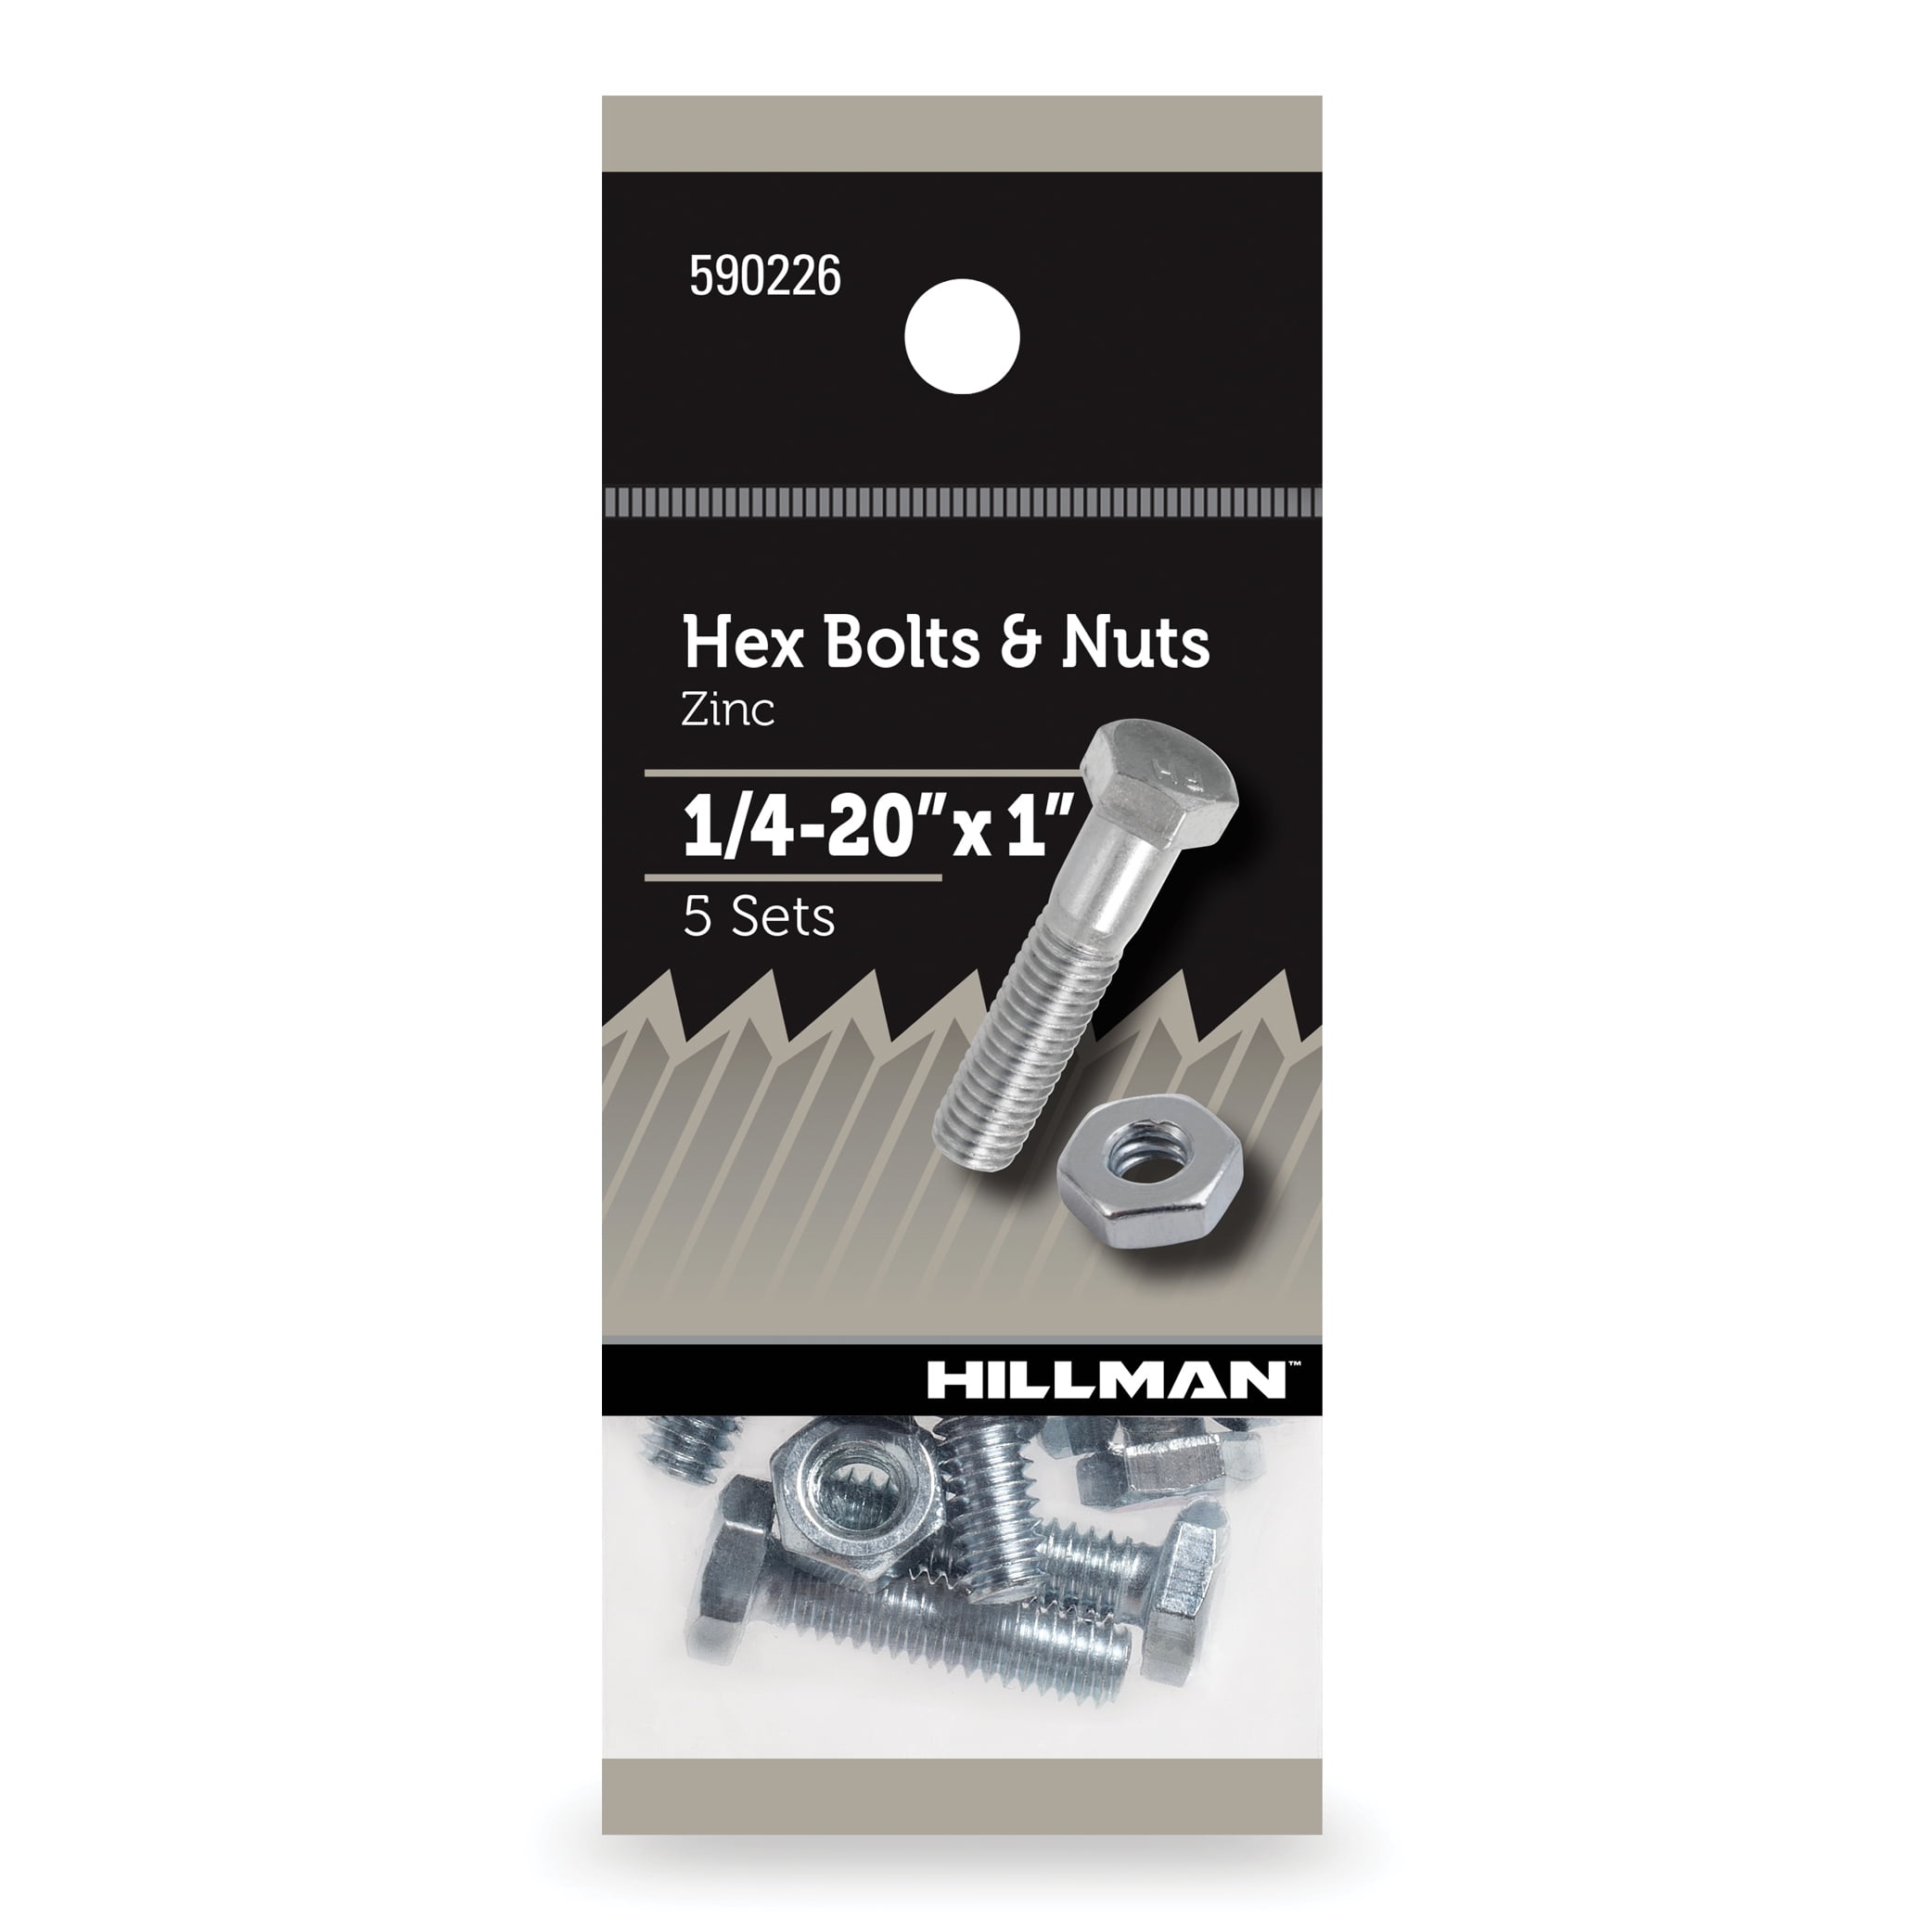 Hillman Hex Bolts and Nuts, Grade 2 Steel, Zinc, 1/4-20" x 1", 5 Sets